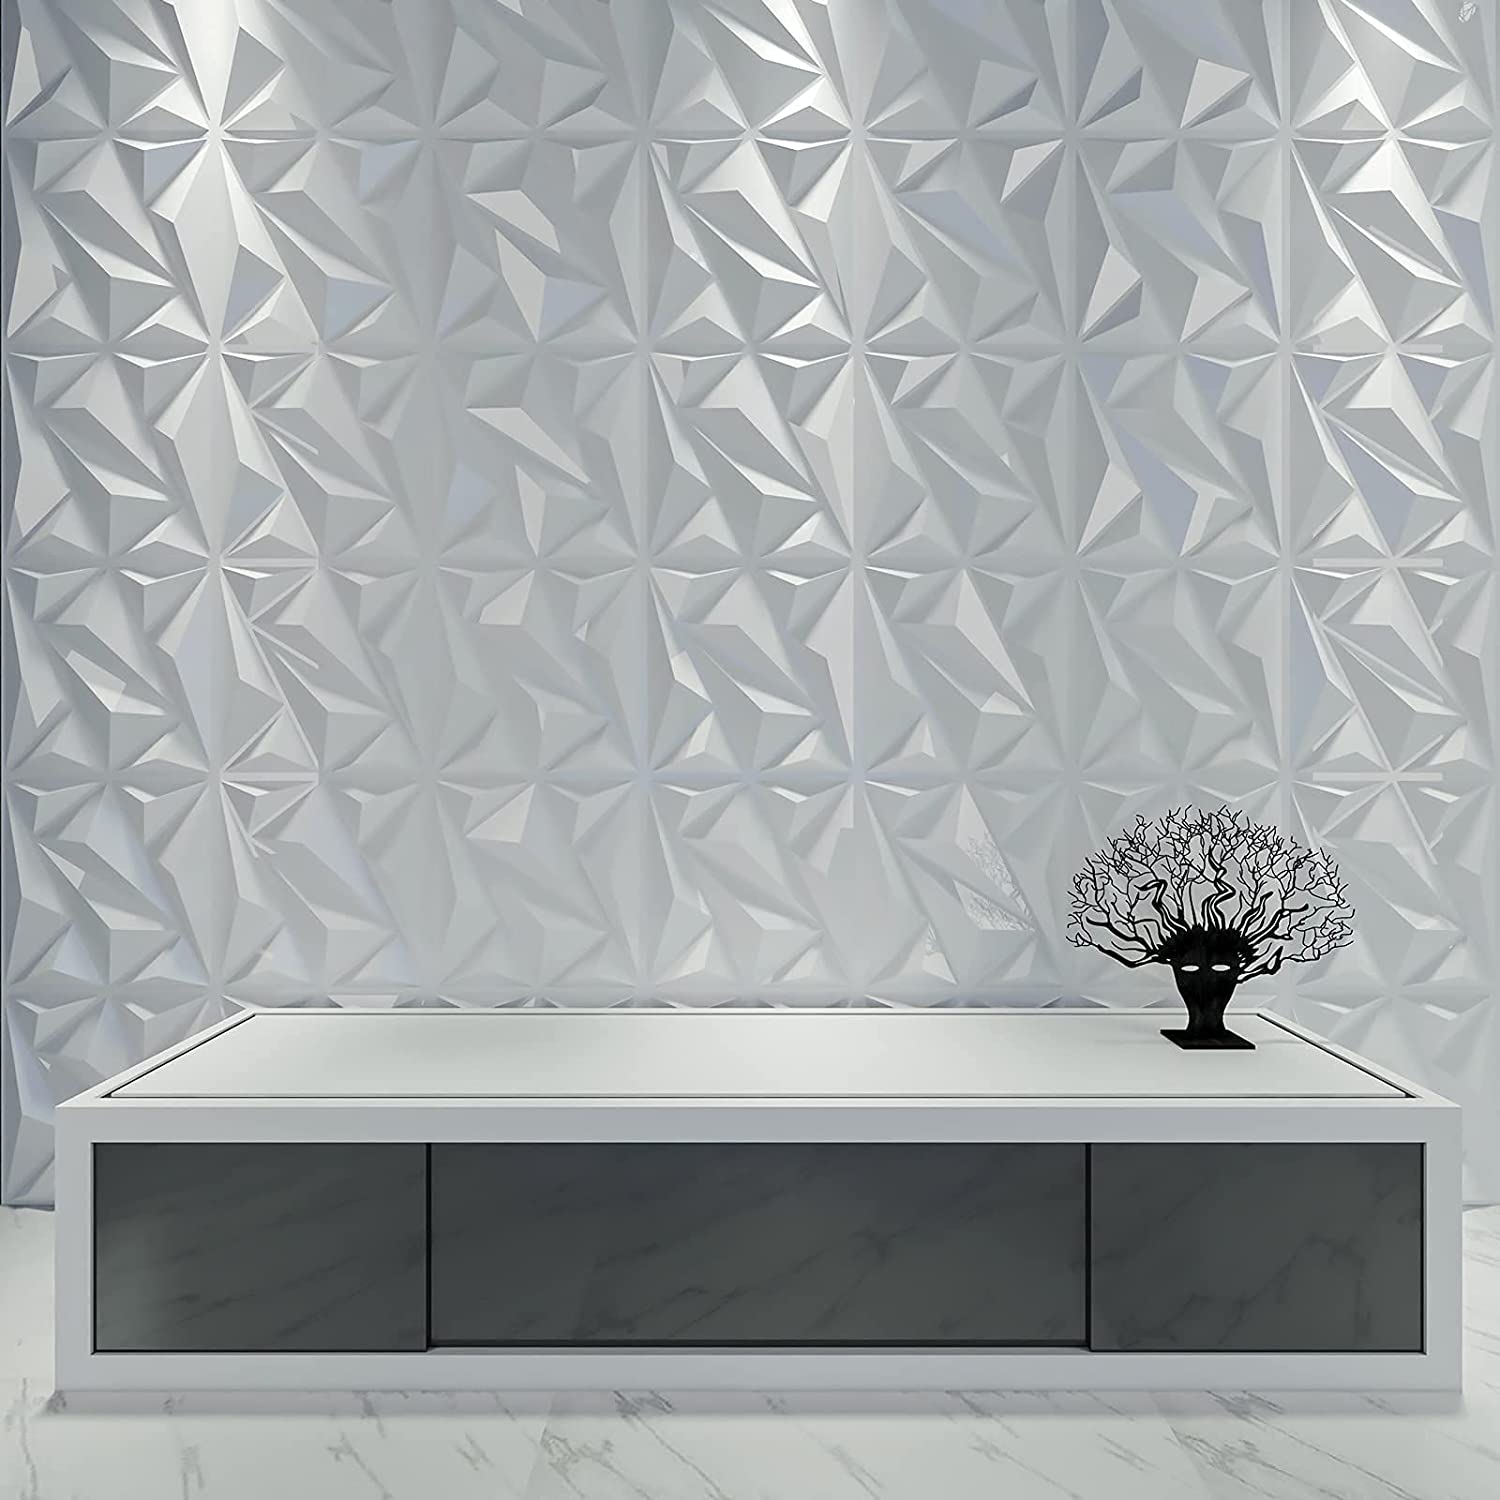 Pared Panel Decorativo 3D Estrella Blanco Caja x3m2 (12 Paneles